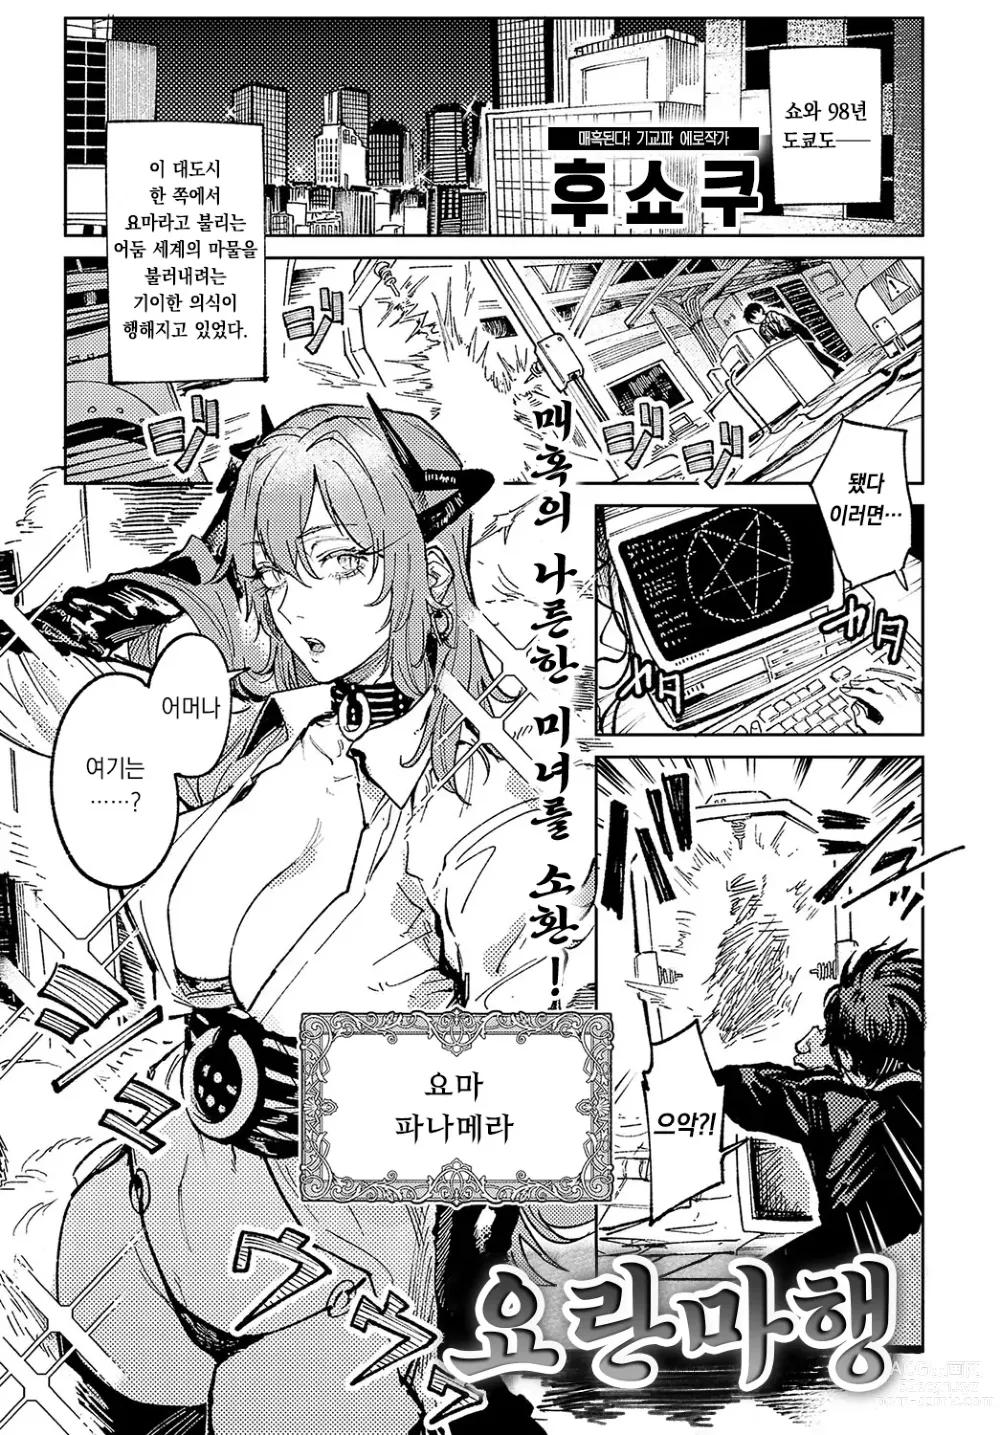 Page 2 of manga 요란마행